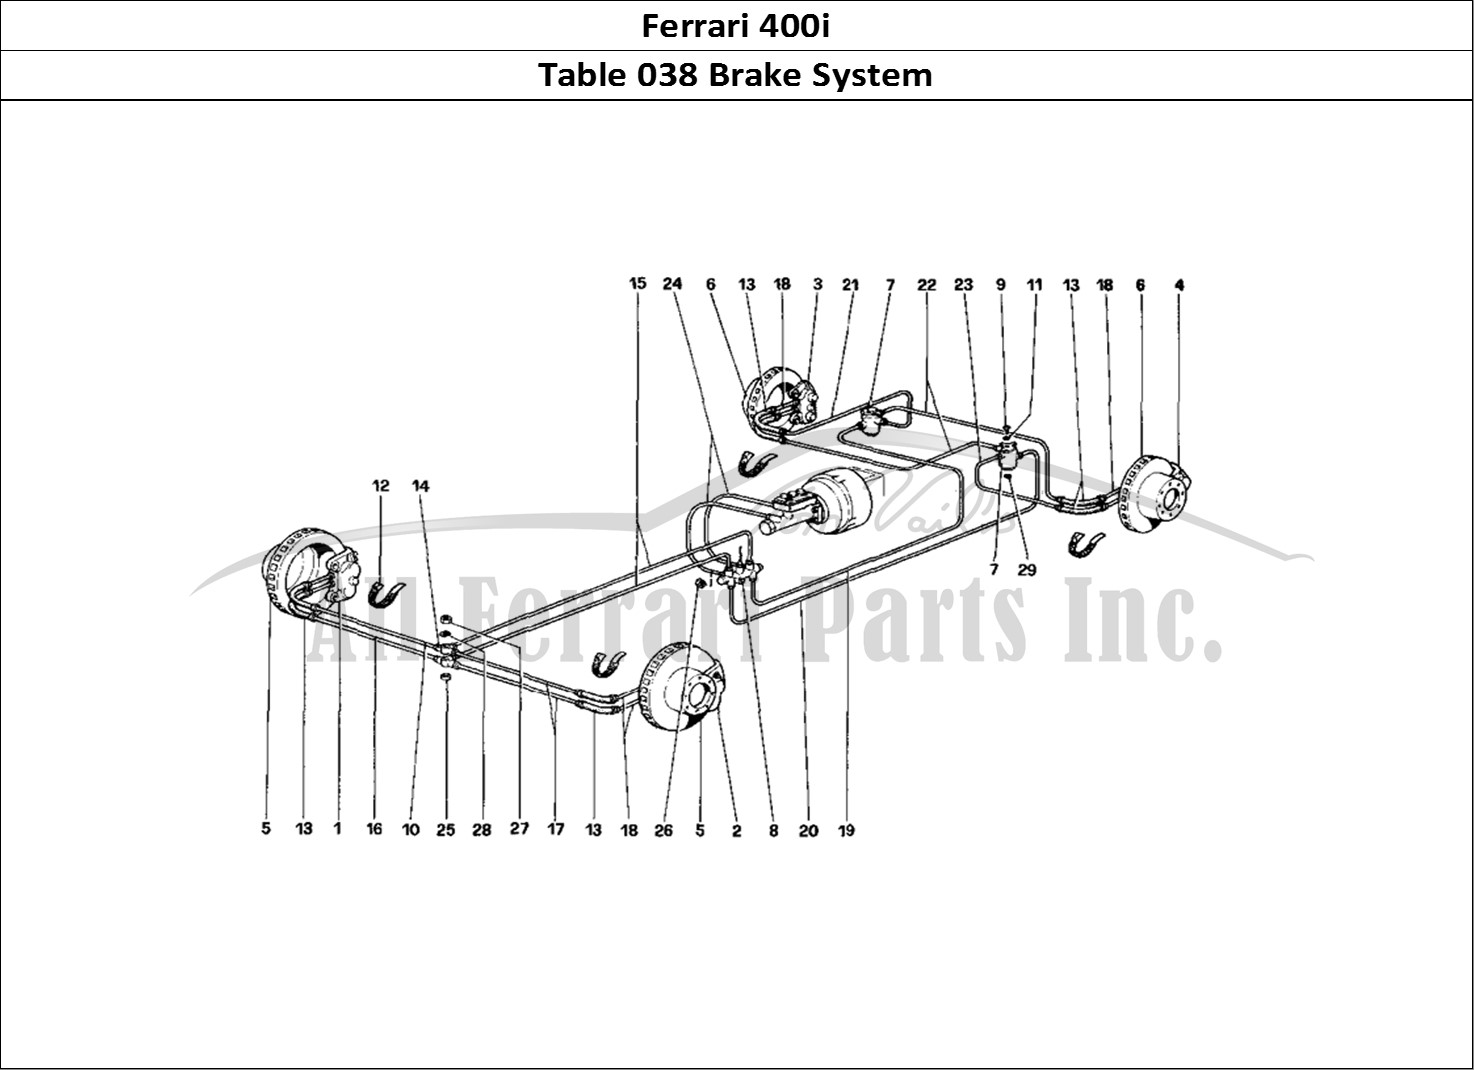 Ferrari Parts Ferrari 400i (1983 Mechanical) Page 038 Brakes System